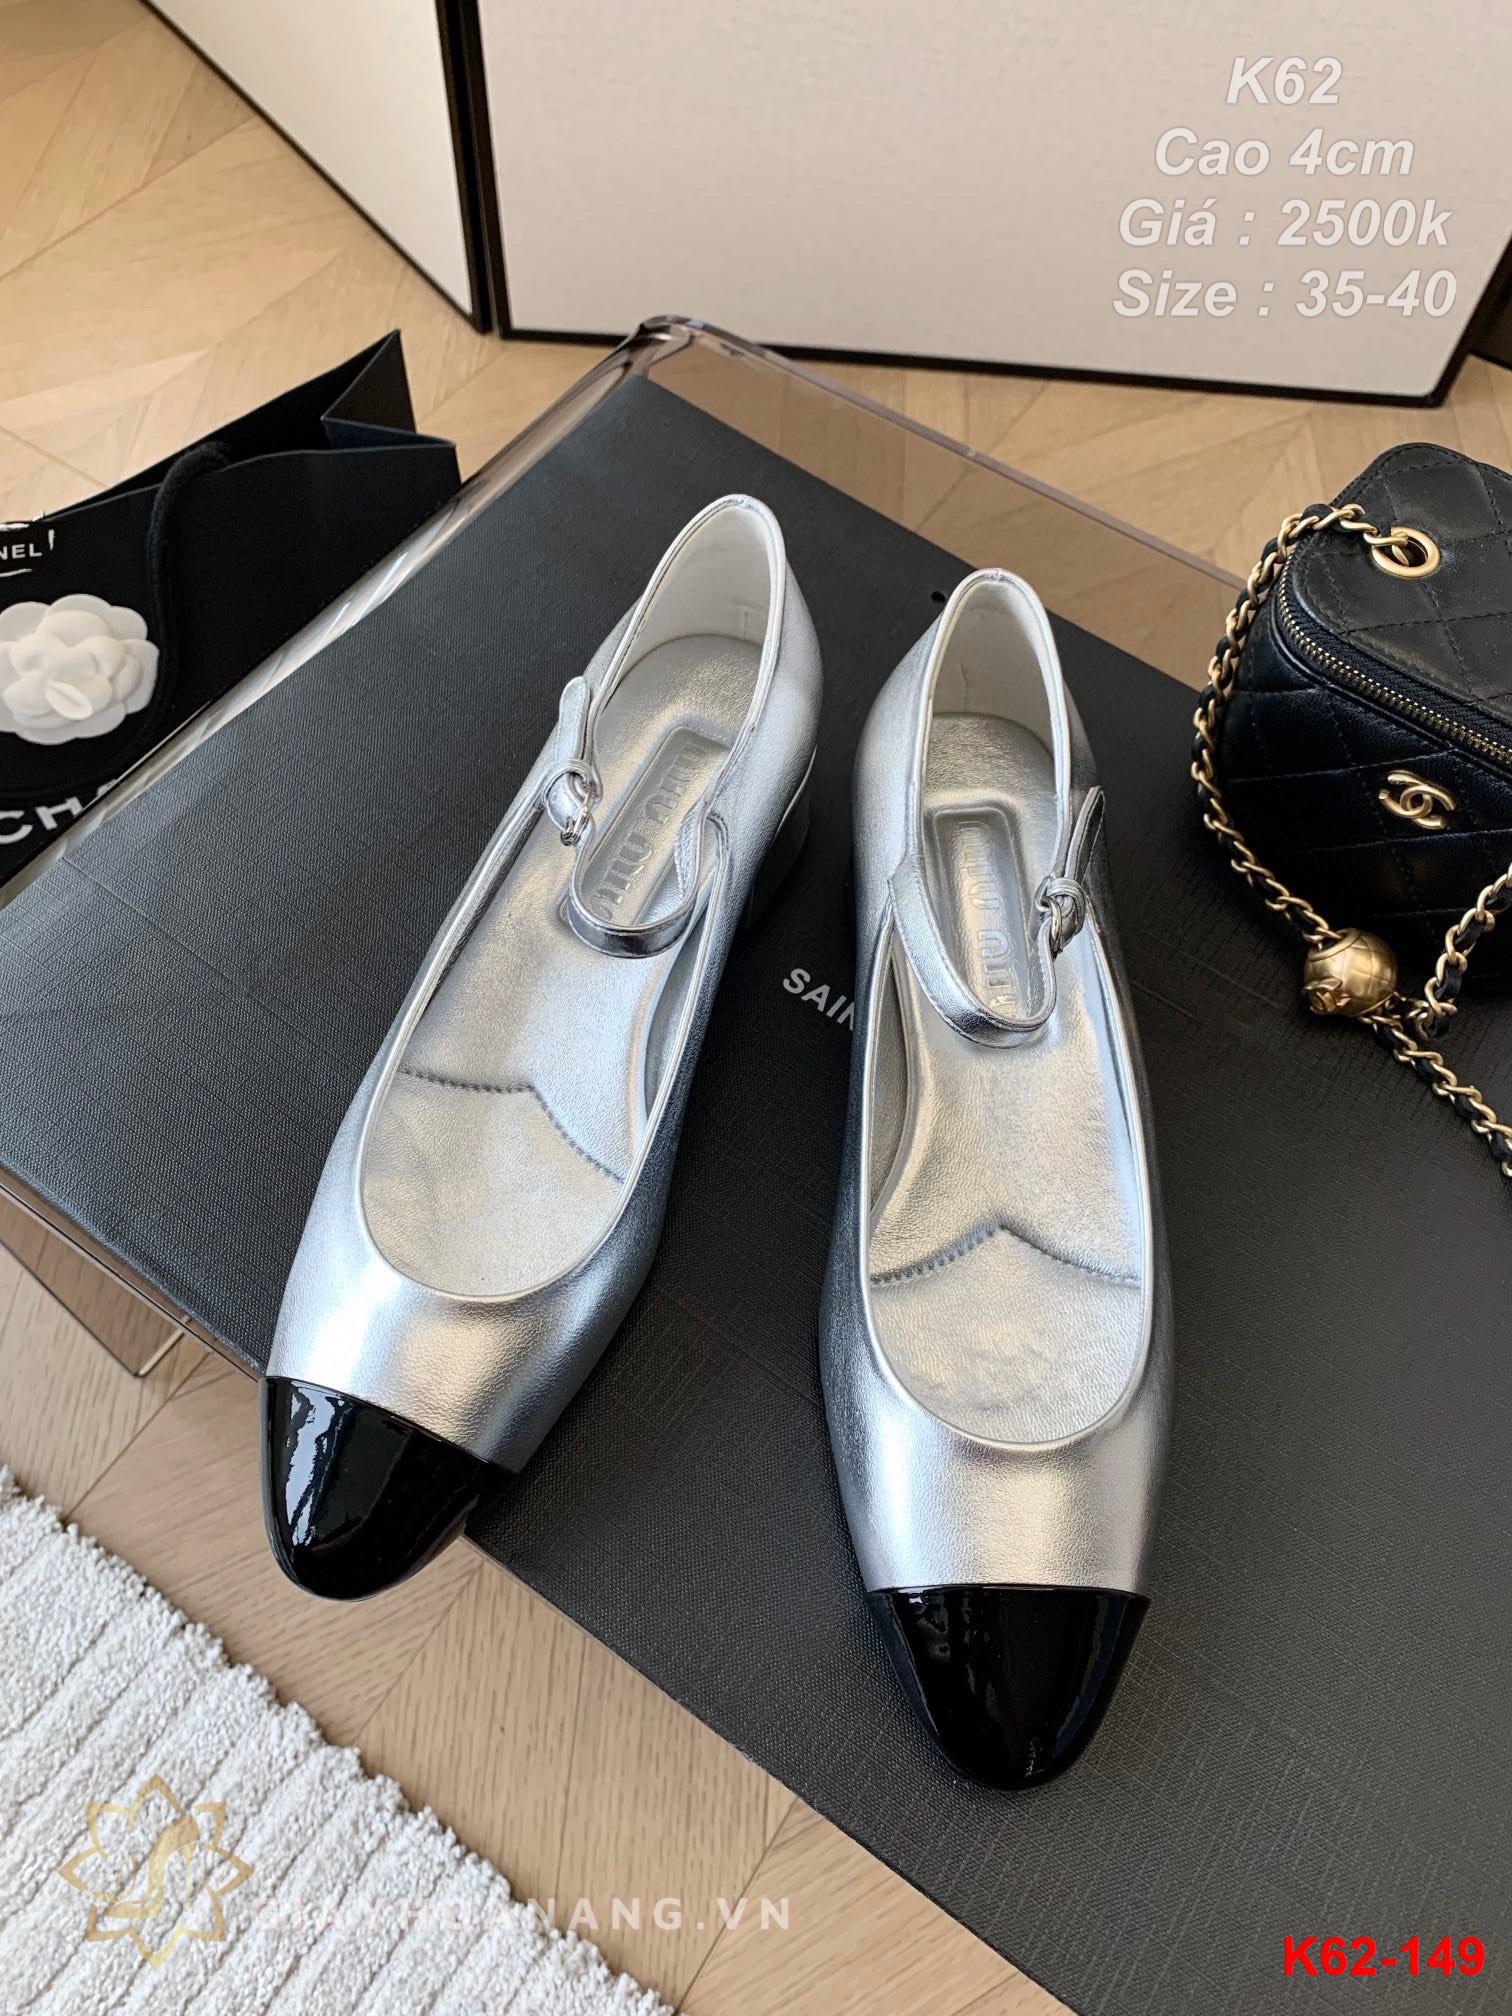 K62-149 Chanel giày cao gót 4cm siêu cấp